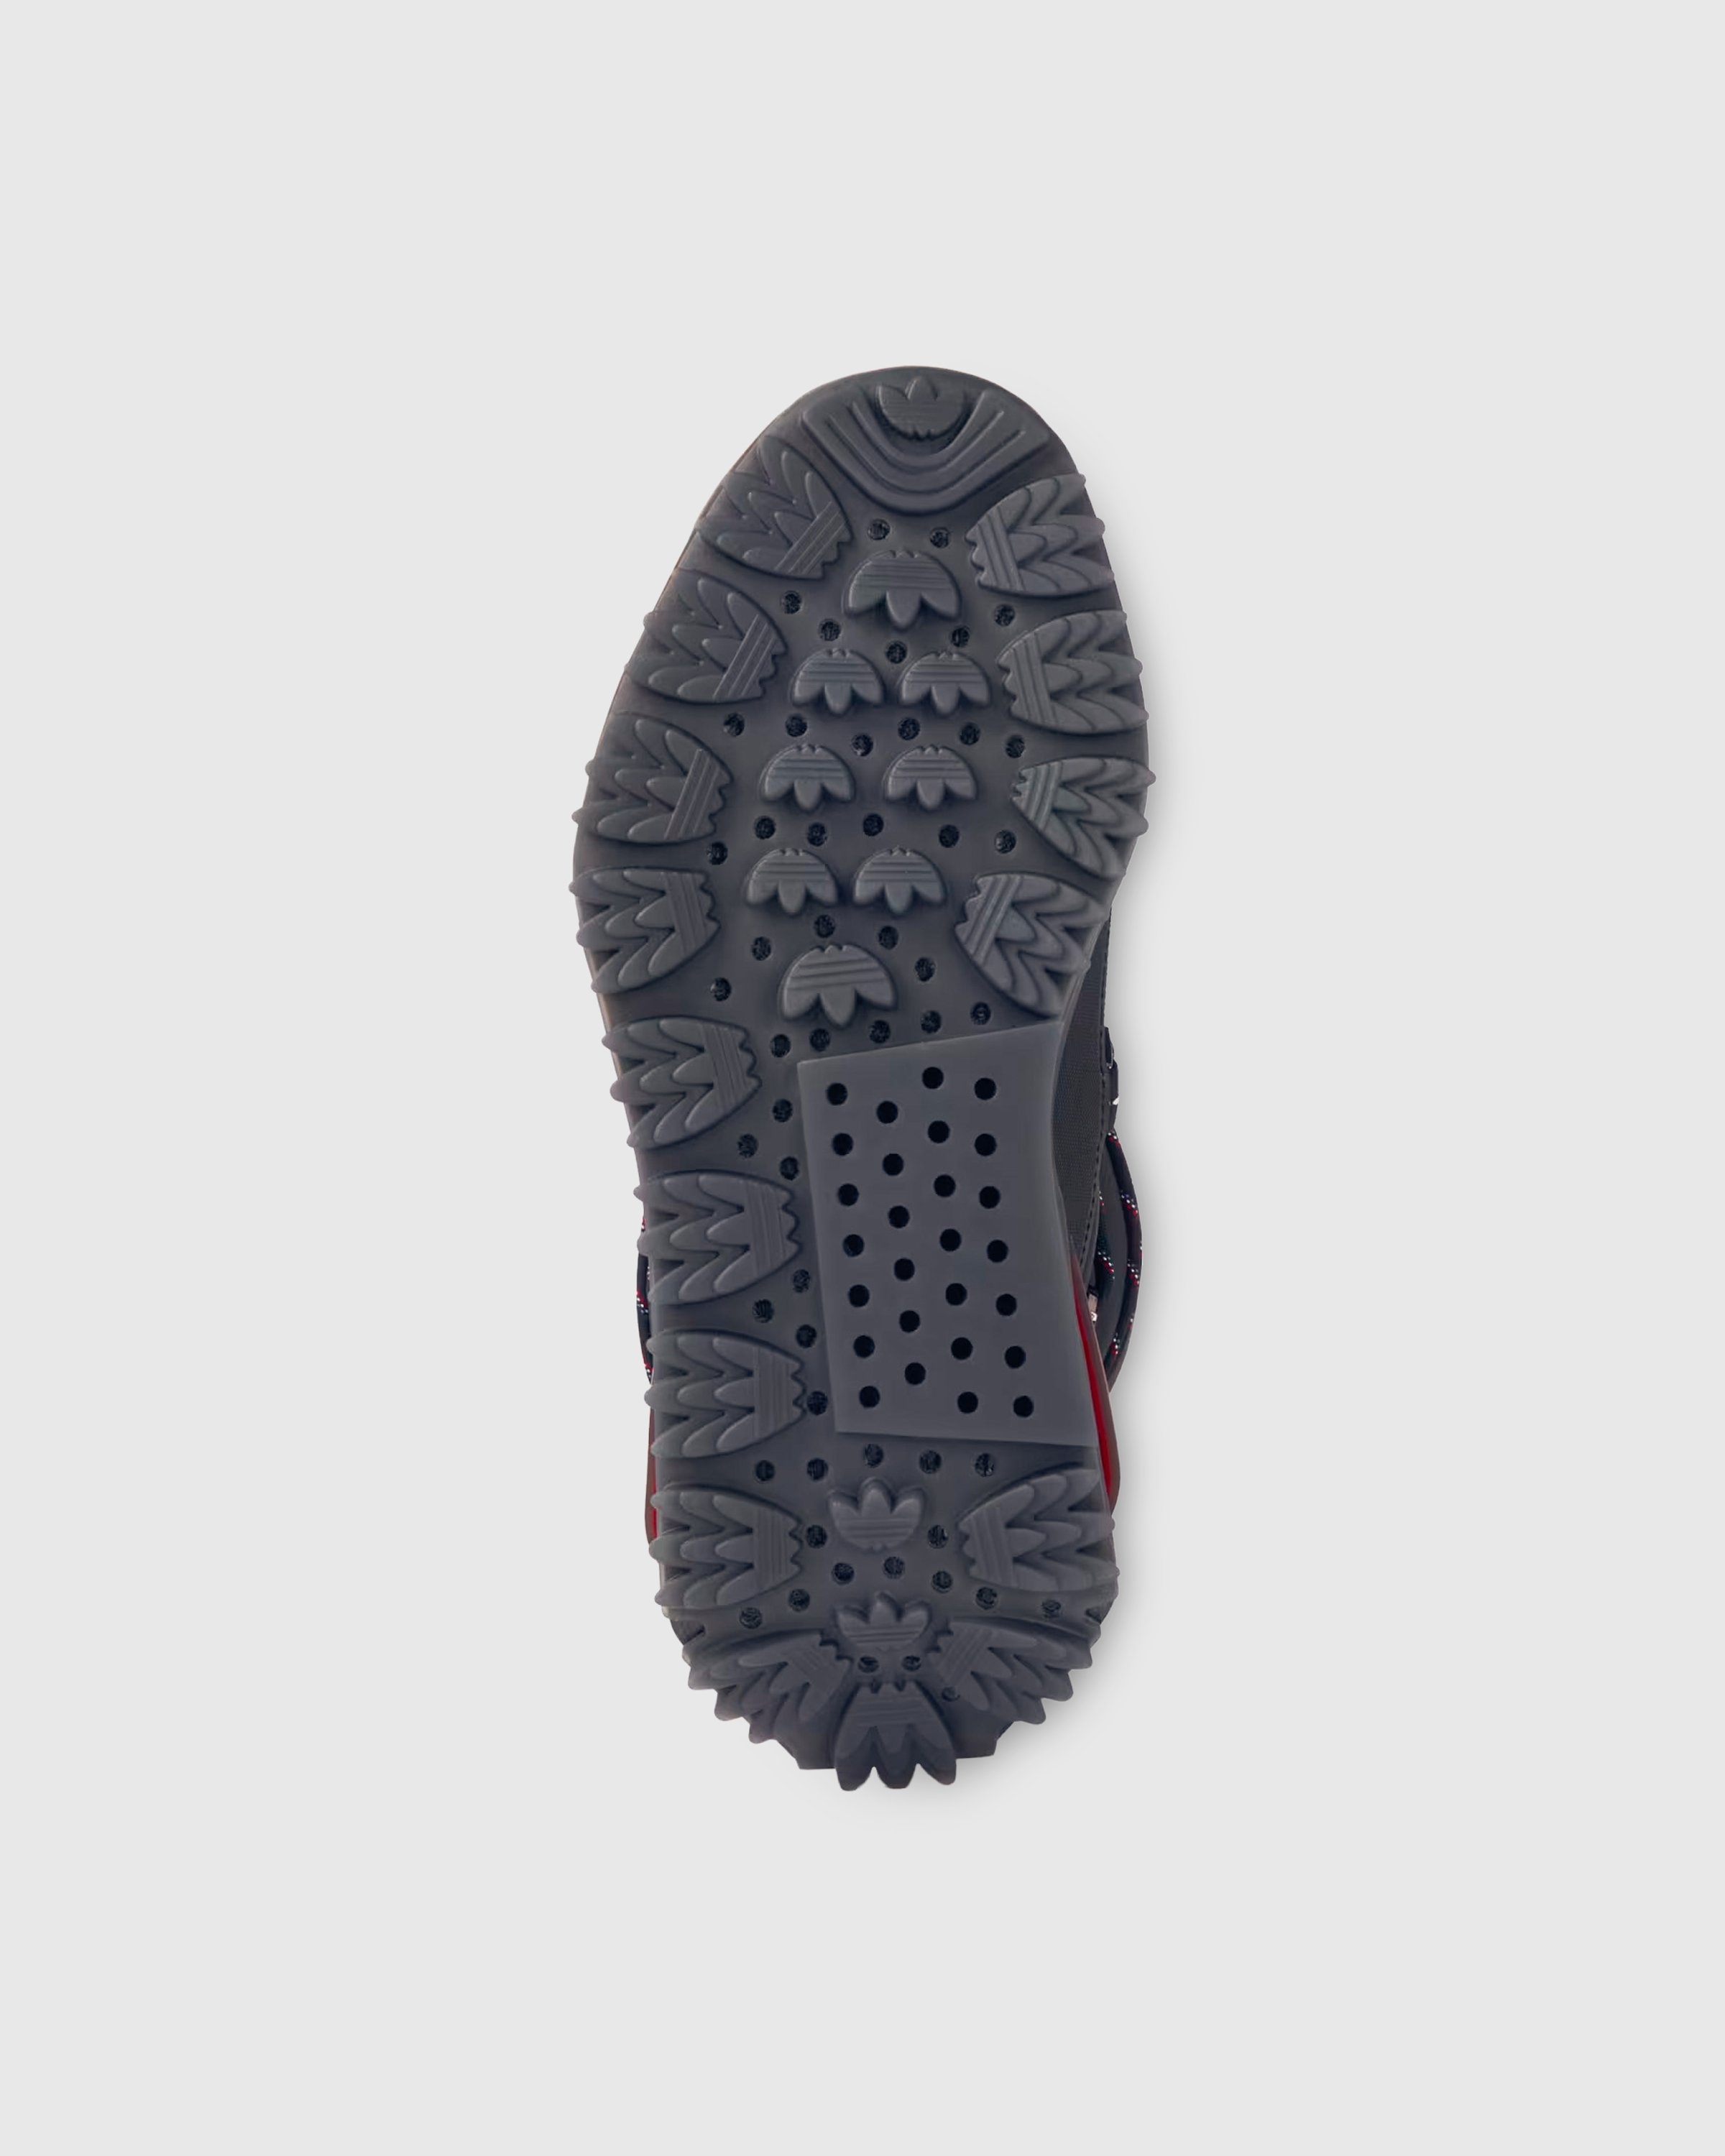 adidas Moncler x adidas Originals NMD Runner Shoes - Black, Unisex  Lifestyle